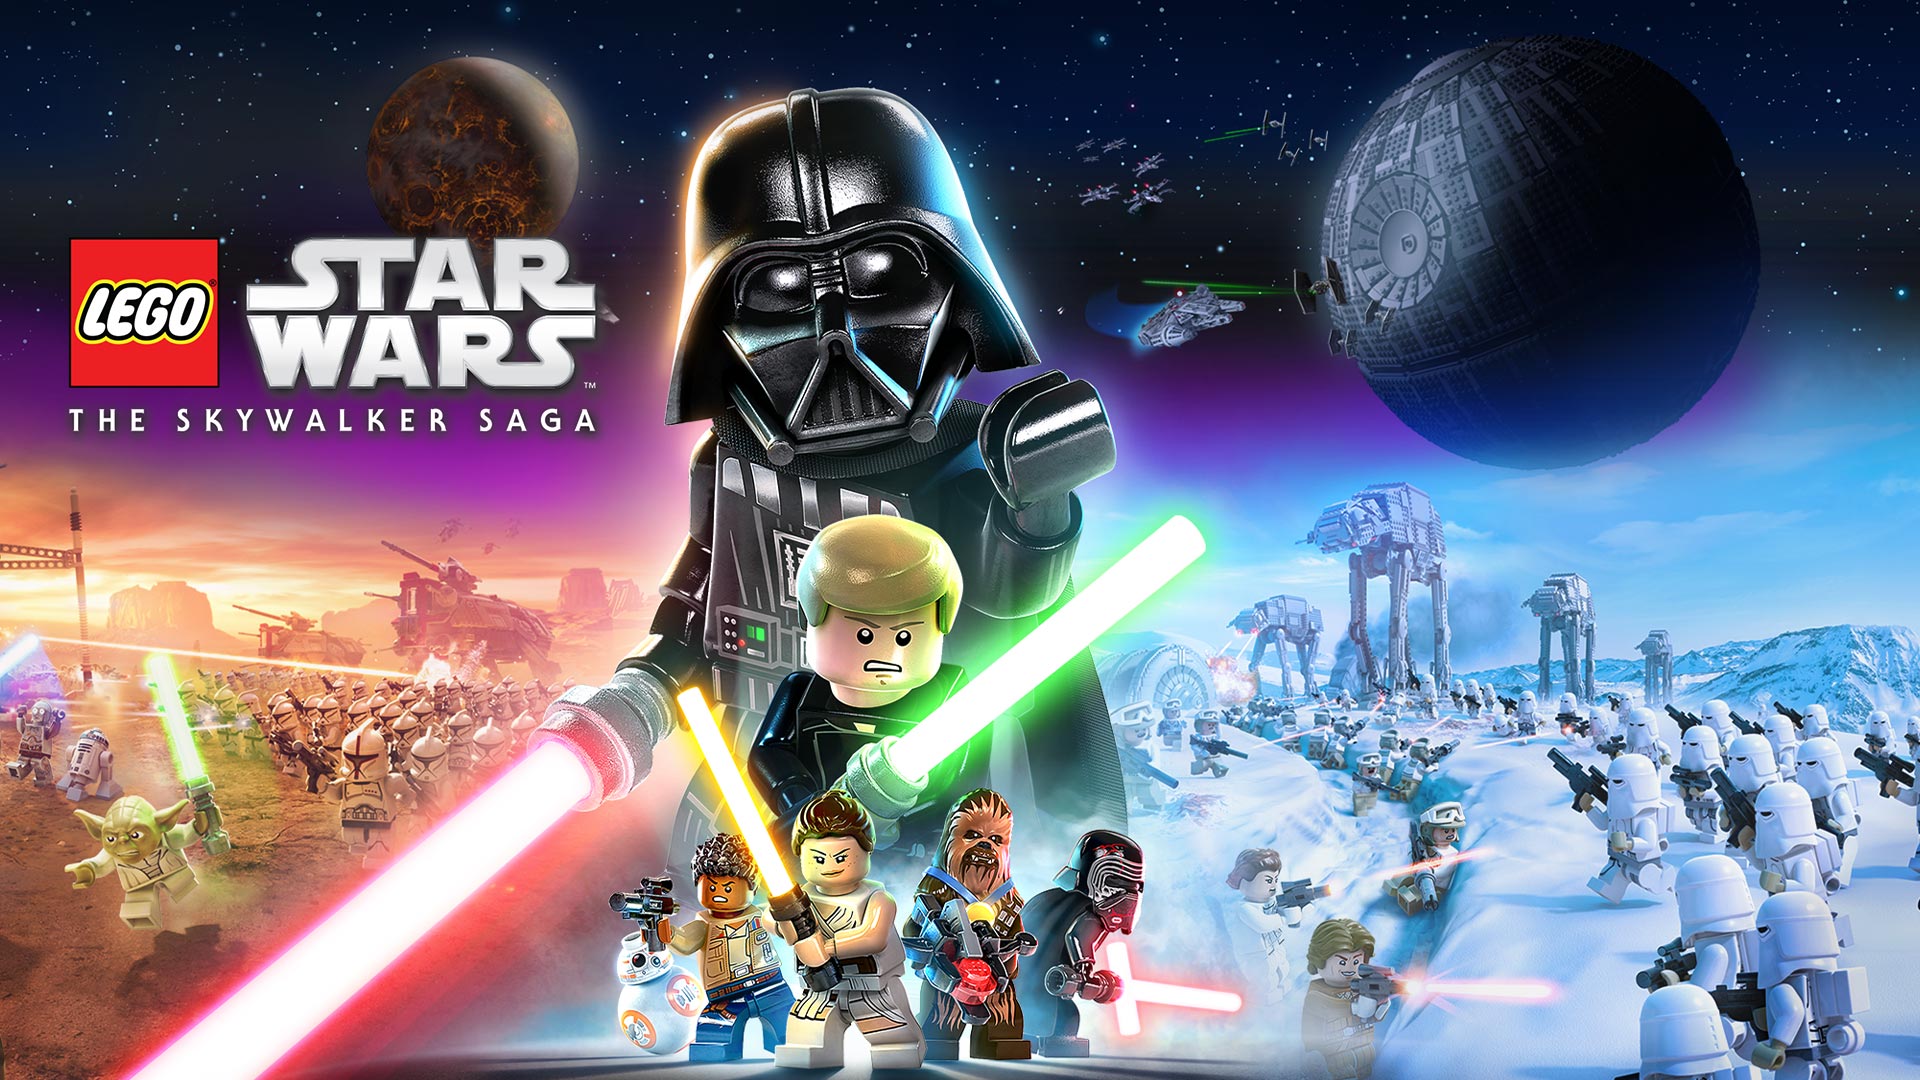 LEGO Star Wars: The Skywalker Saga went gold